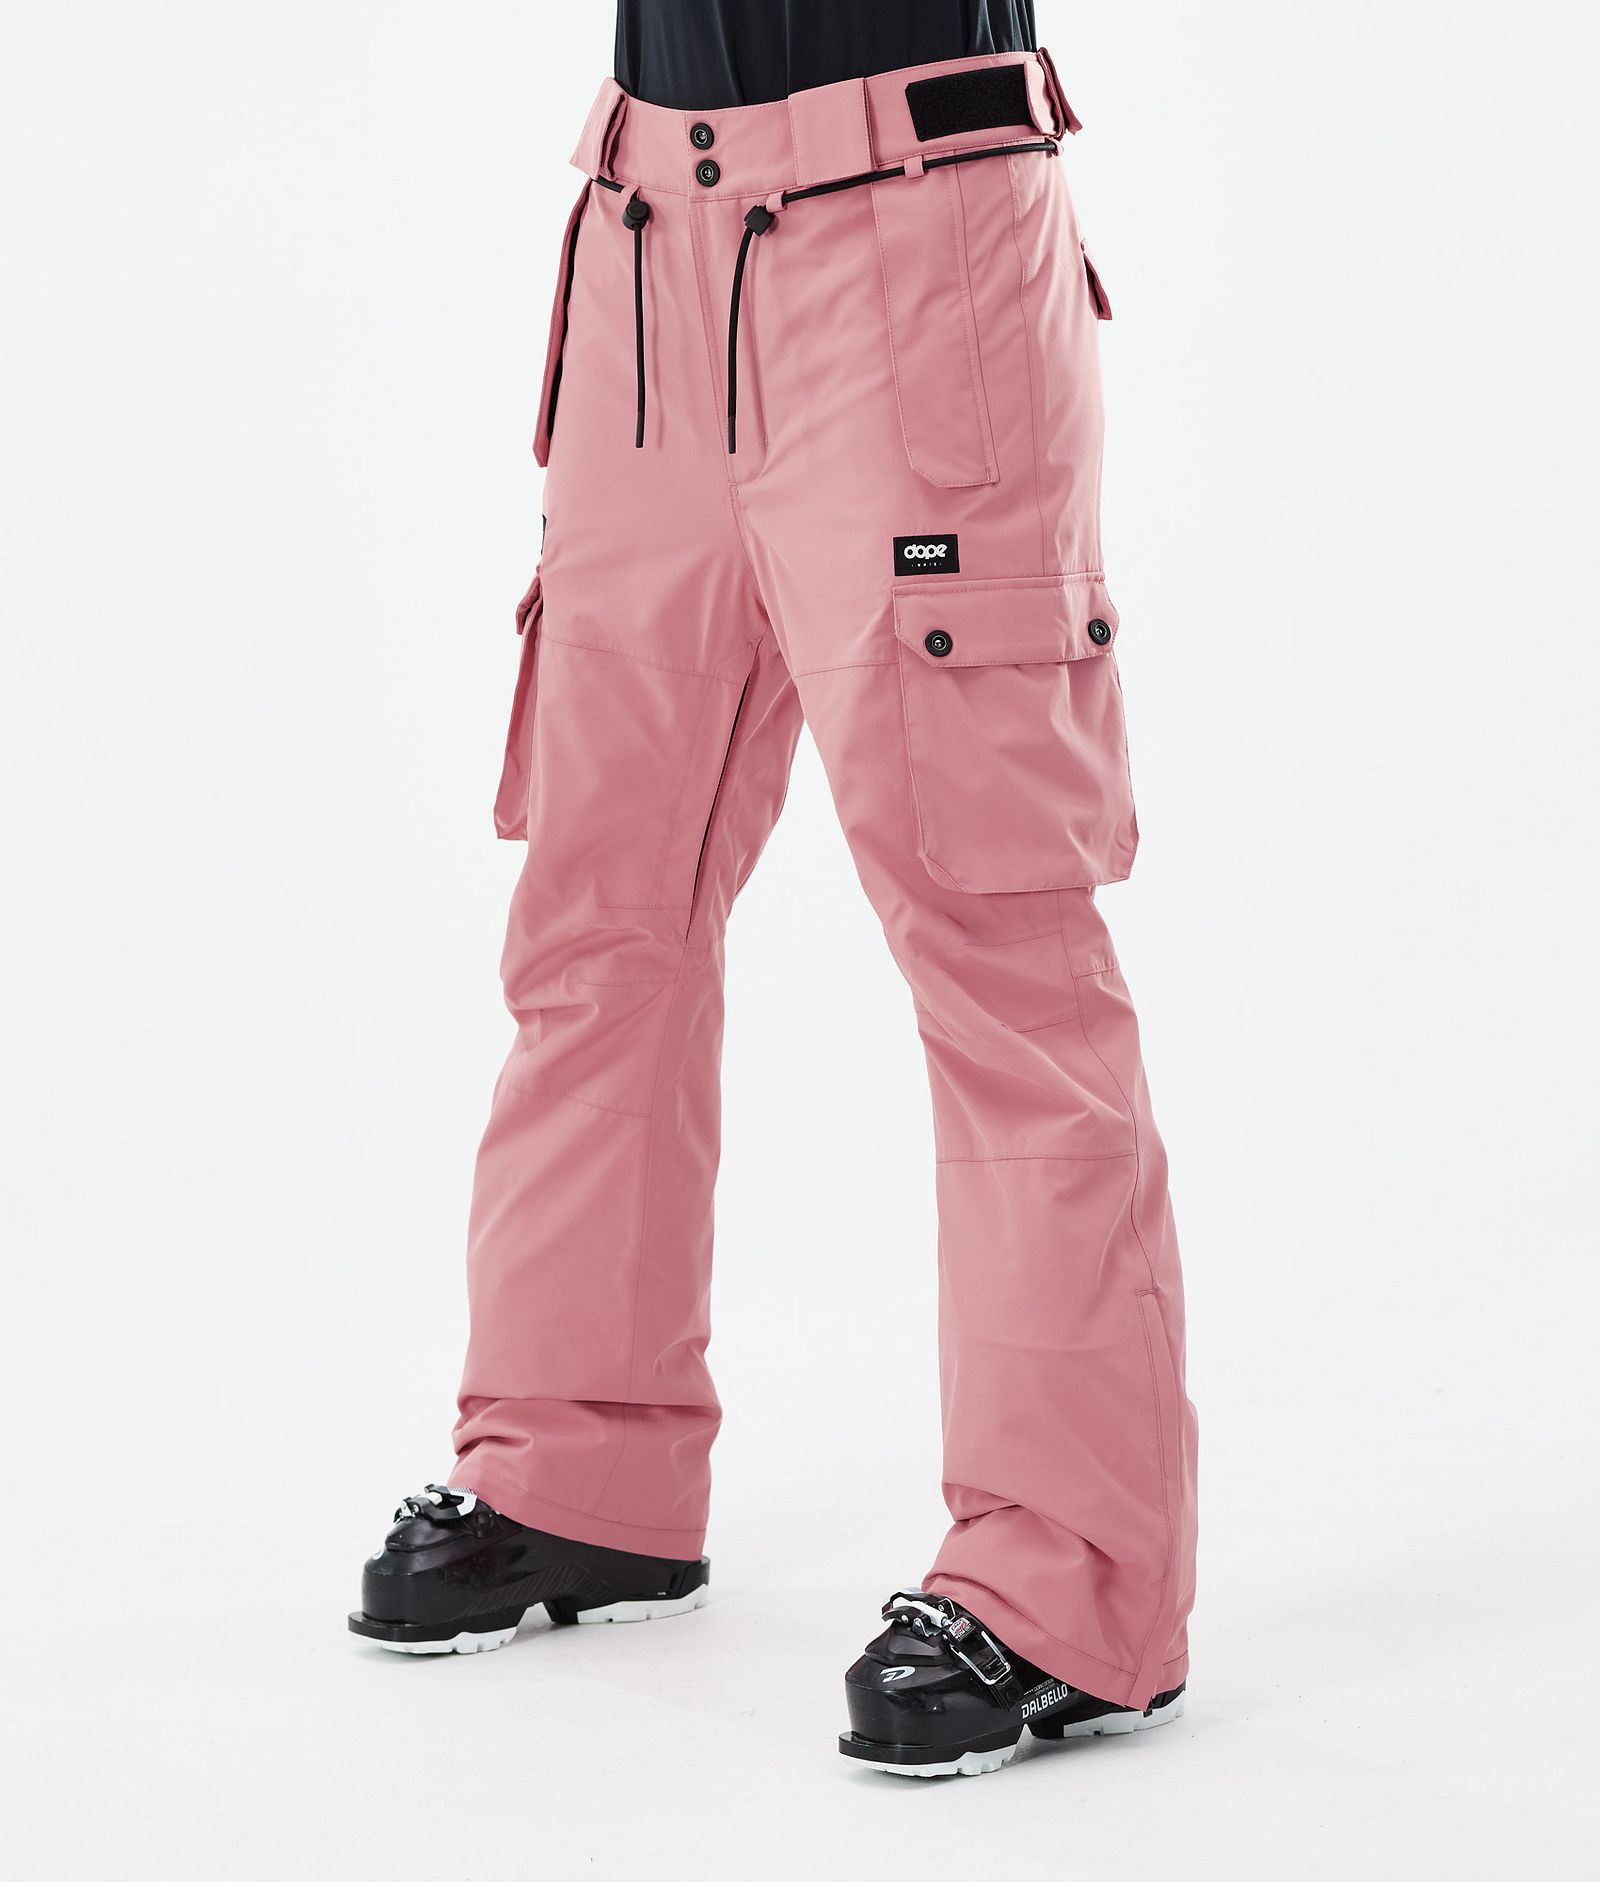 Pink Snow Pants - Shop on Pinterest